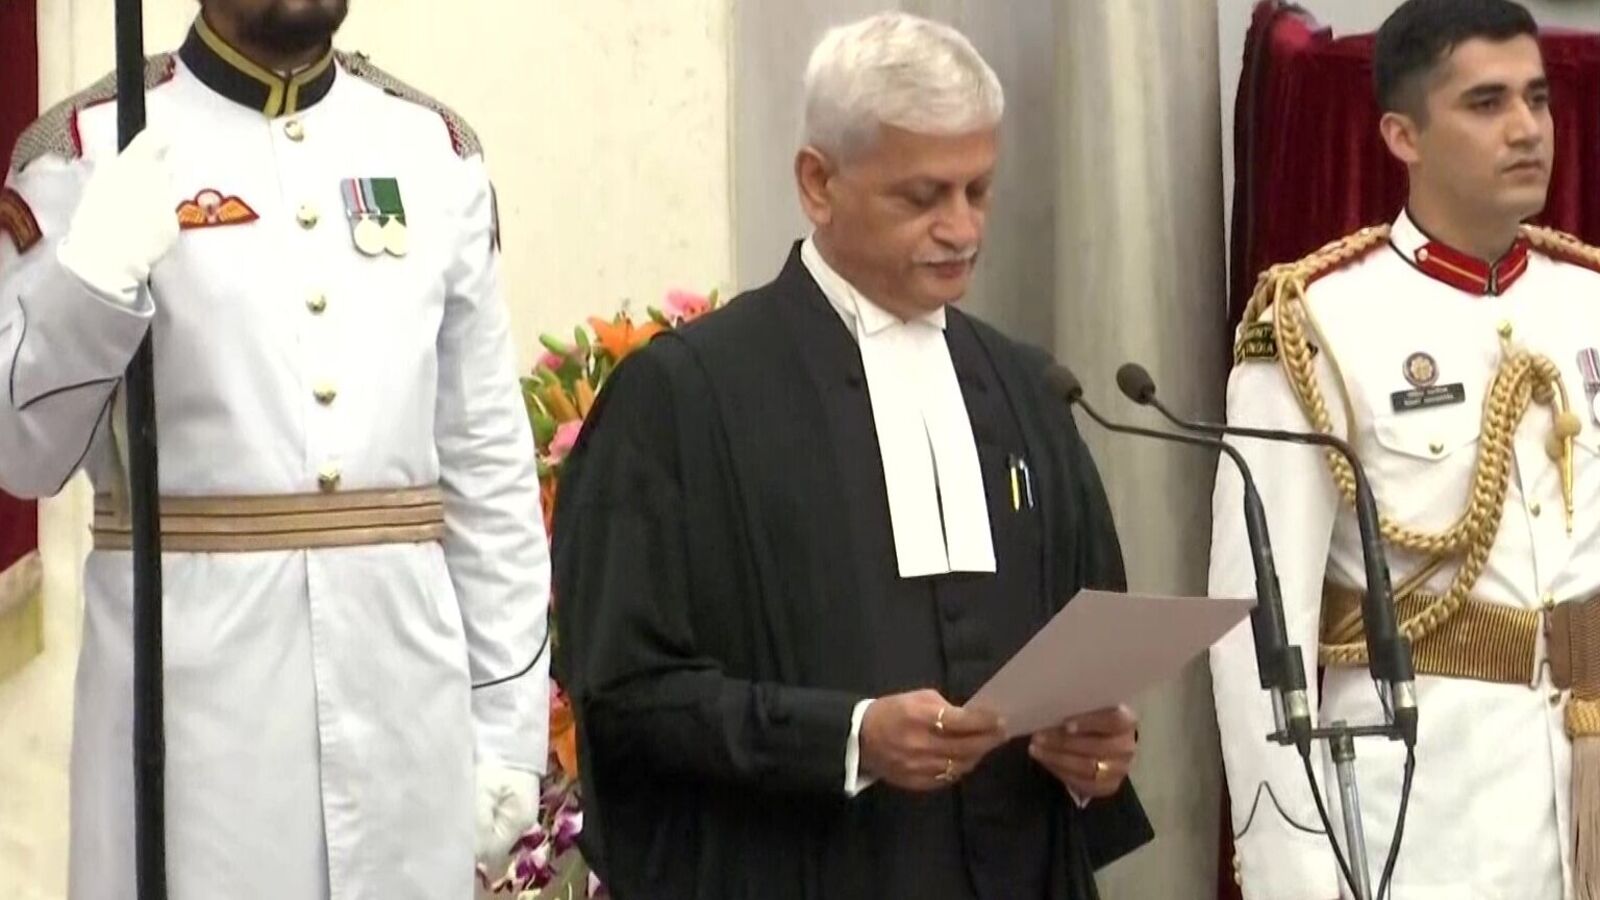 UU Lalit : உச்சநீதிமன்றத்தின் 49ஆவது தலைமை நீதிபதியாக பதவியேற்றார் யு.யு. லலித்!-uu lalit was sworn in as the 49th chief justice of the supreme court  - HT Tamil